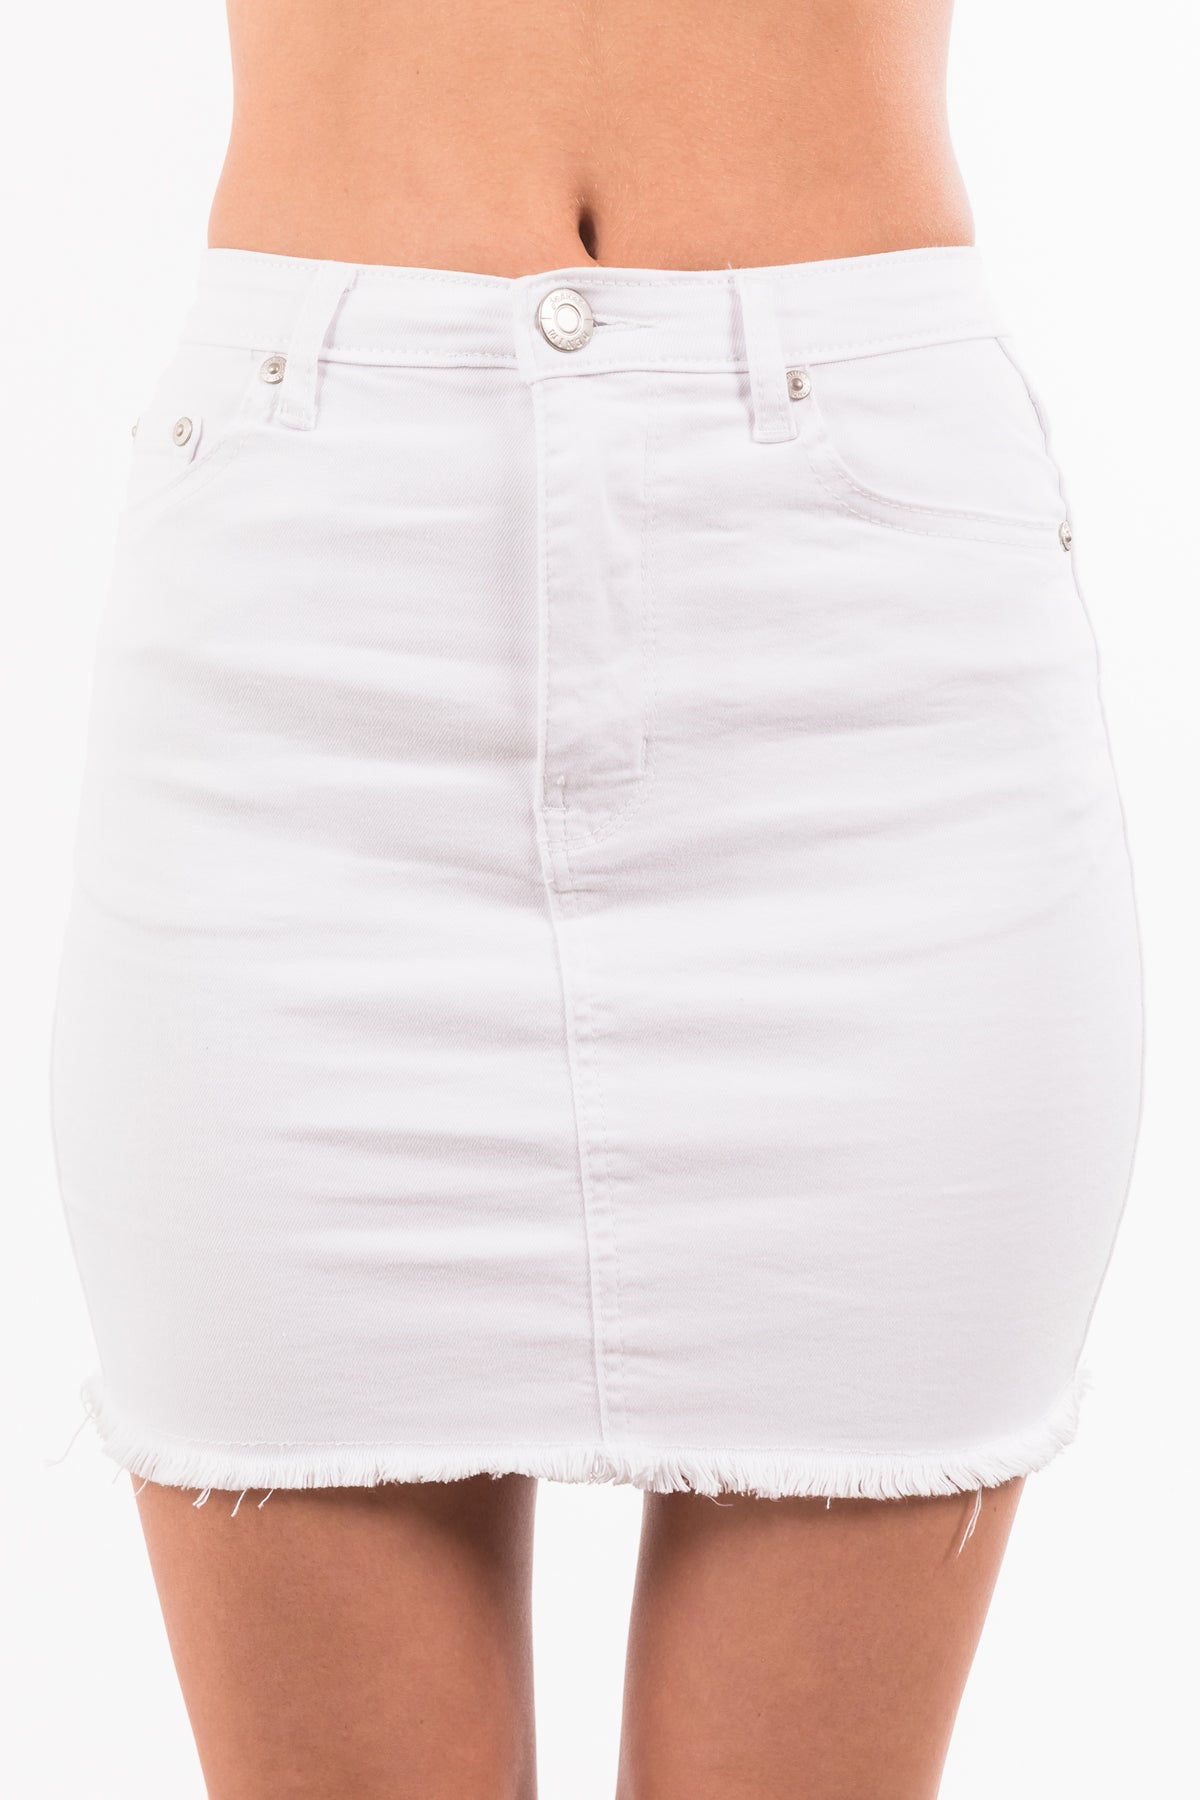 Taylor Mini Skirt - Denim White